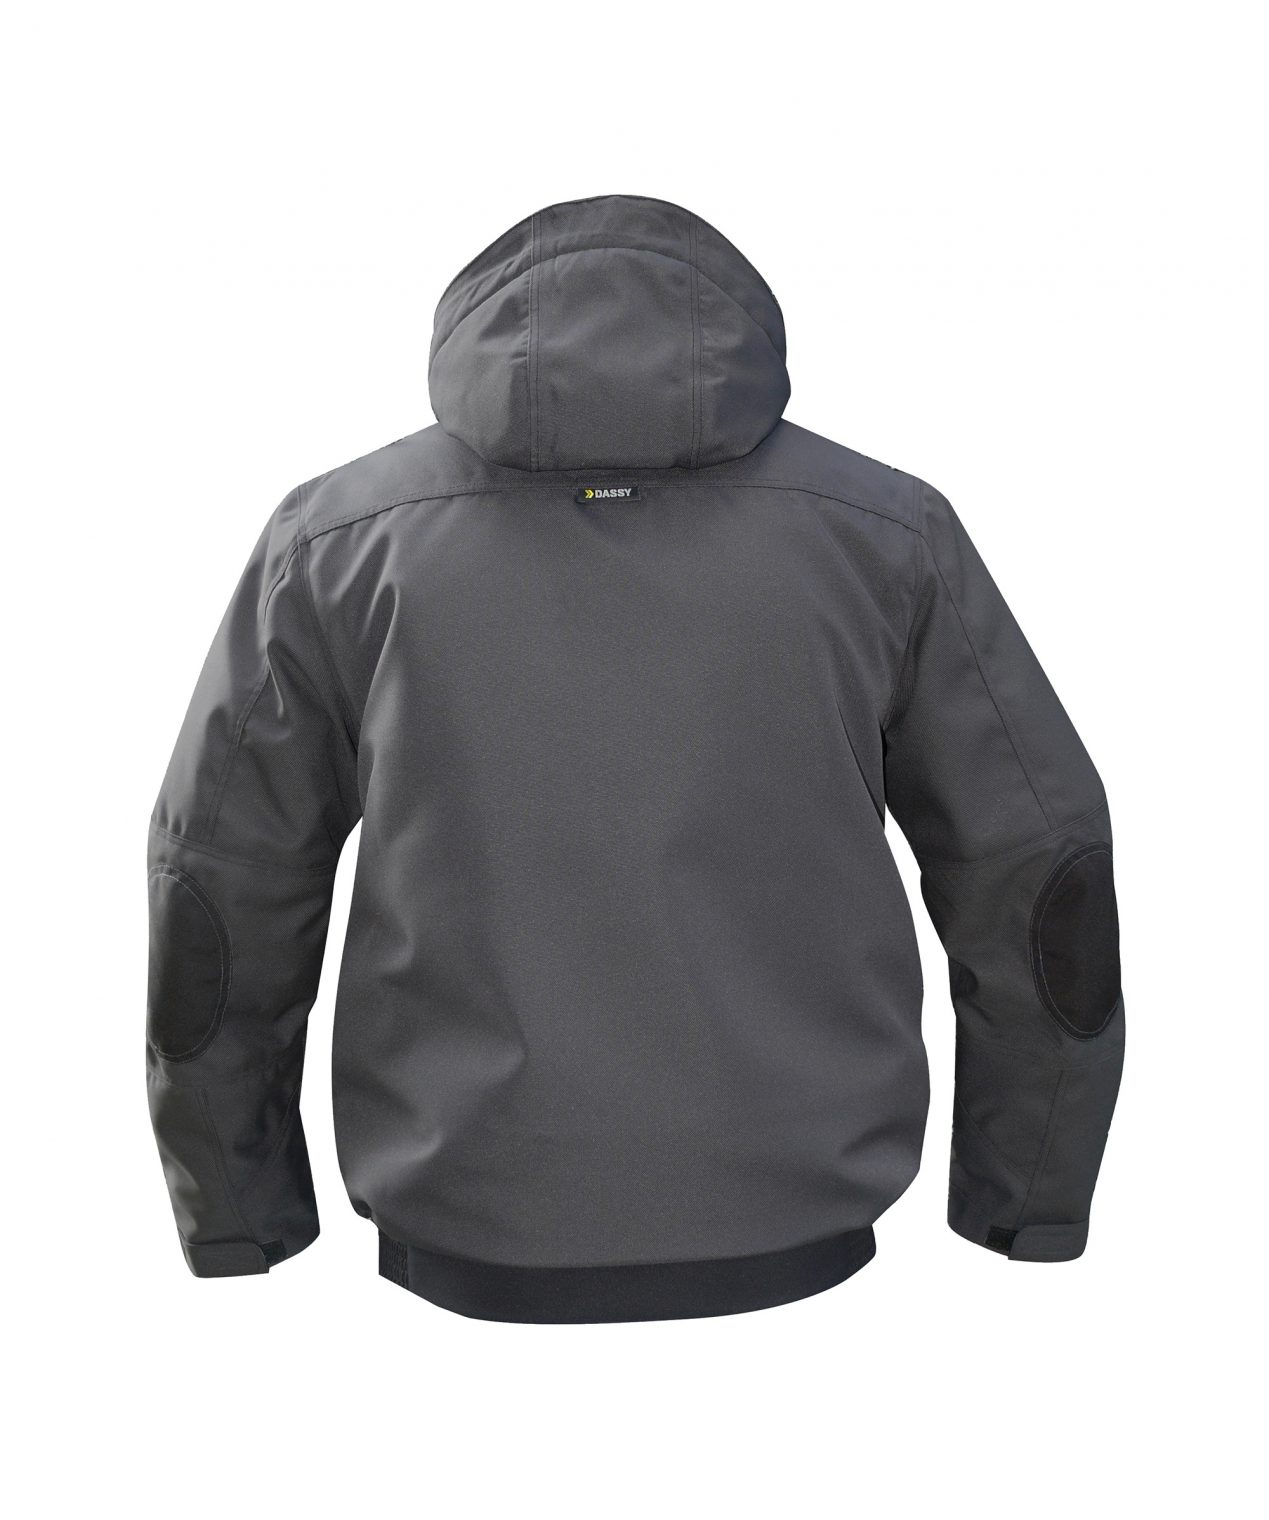 austin canvas winter jacket anthracite grey black back